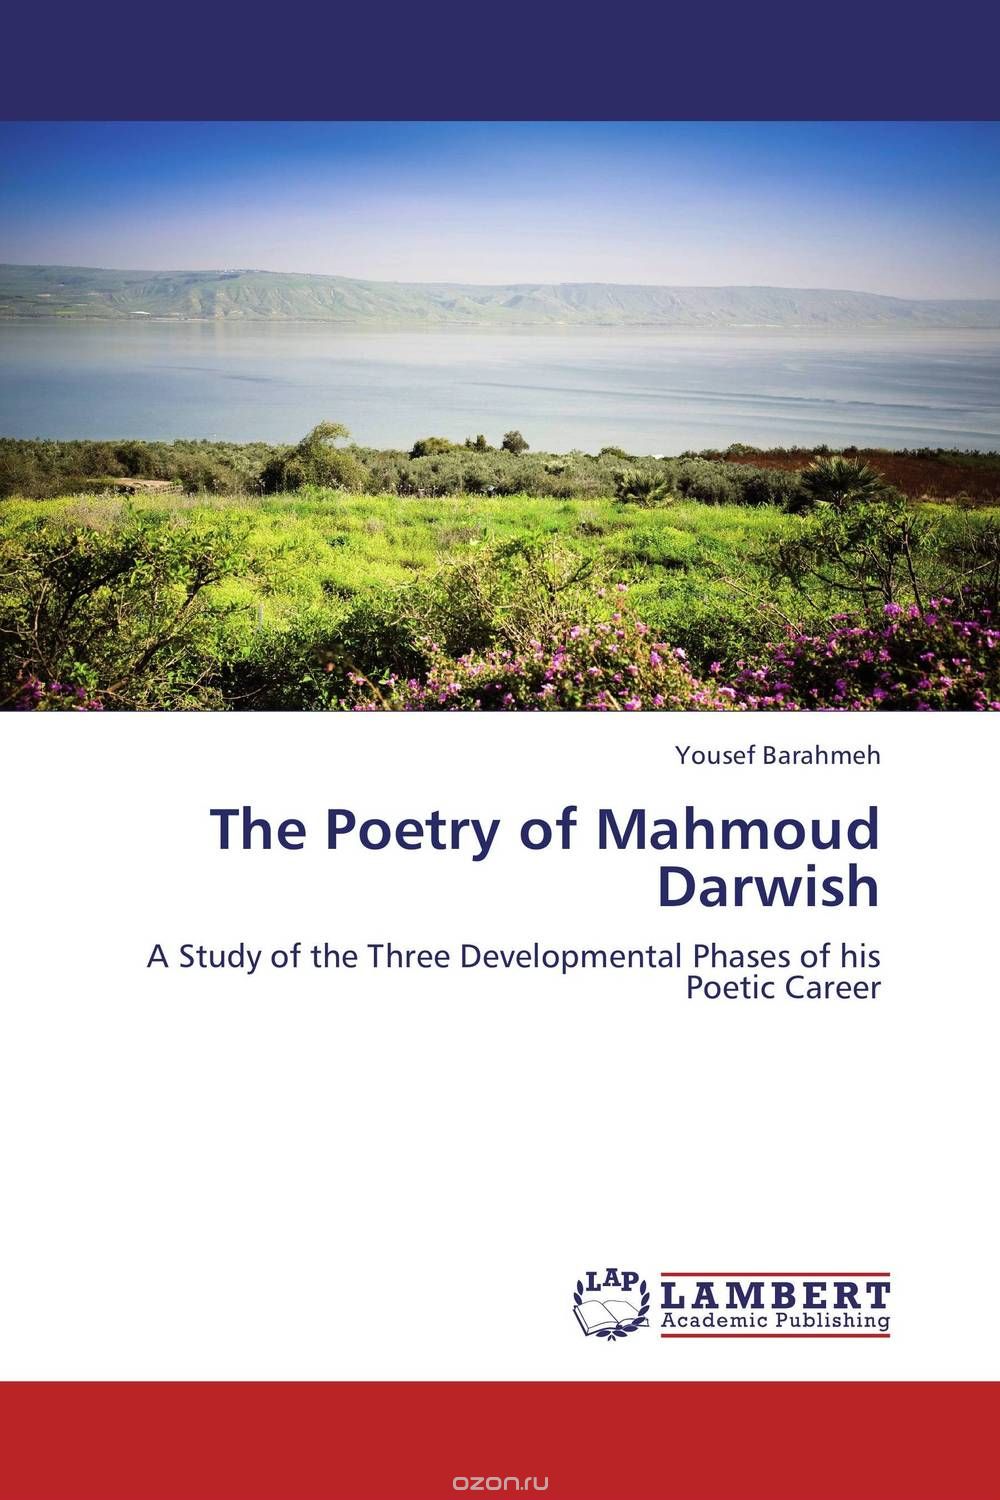 Скачать книгу "The Poetry of Mahmoud Darwish"